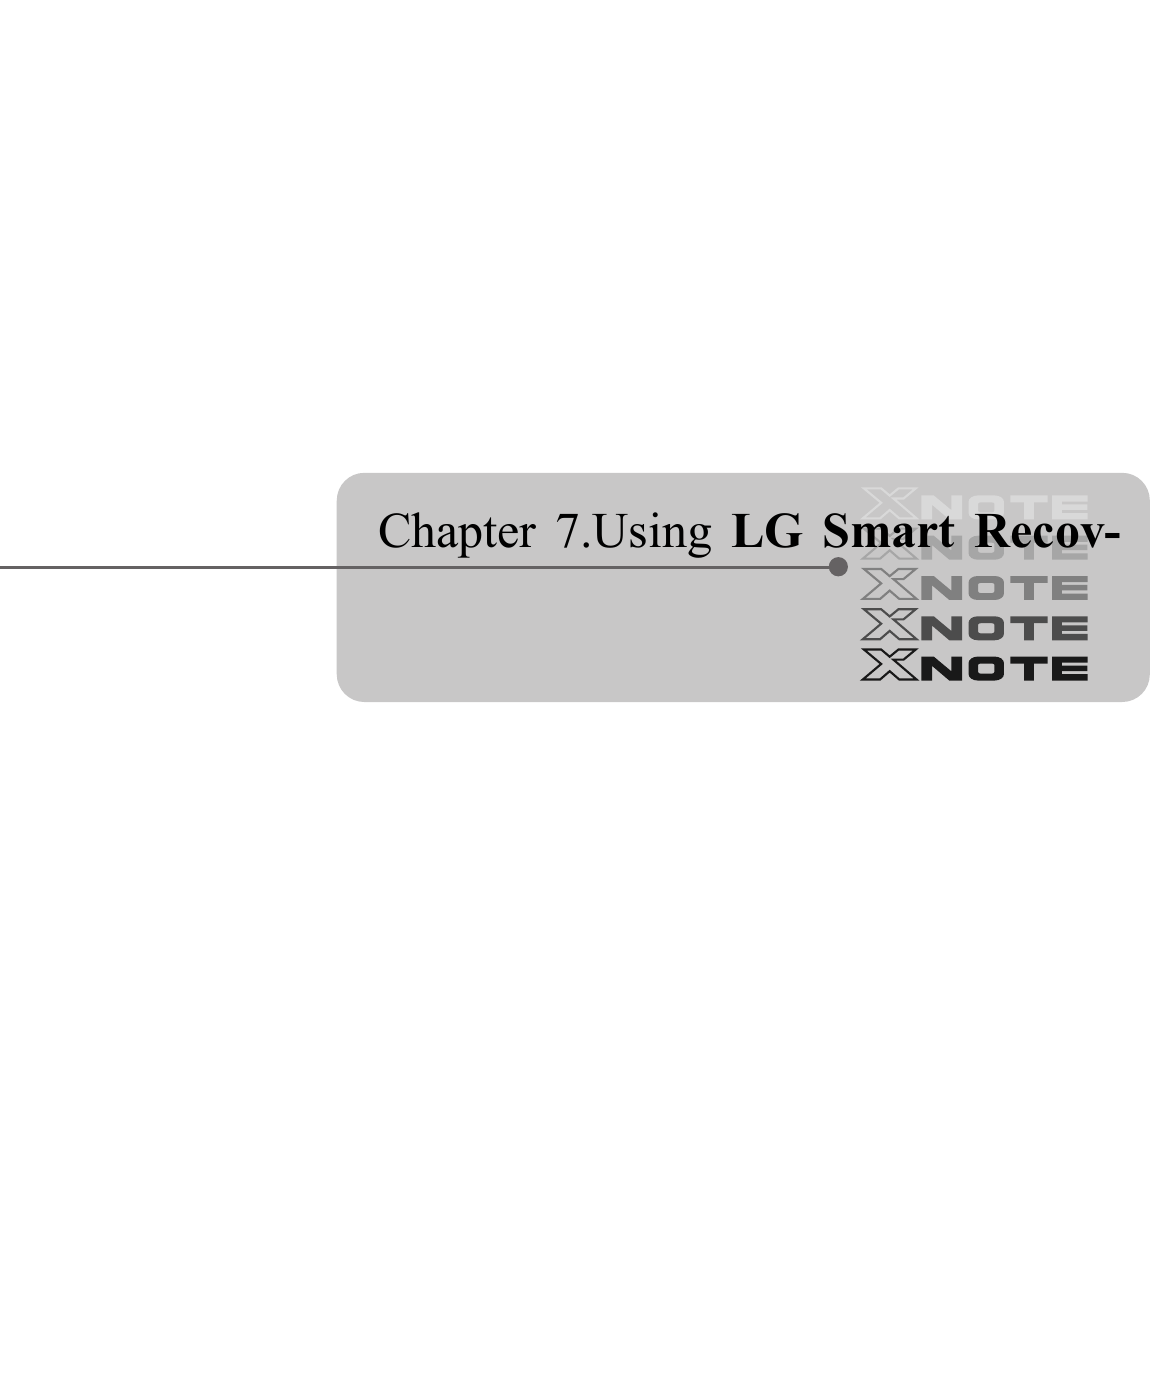  Chapter 7.Using LG Smart Recov-